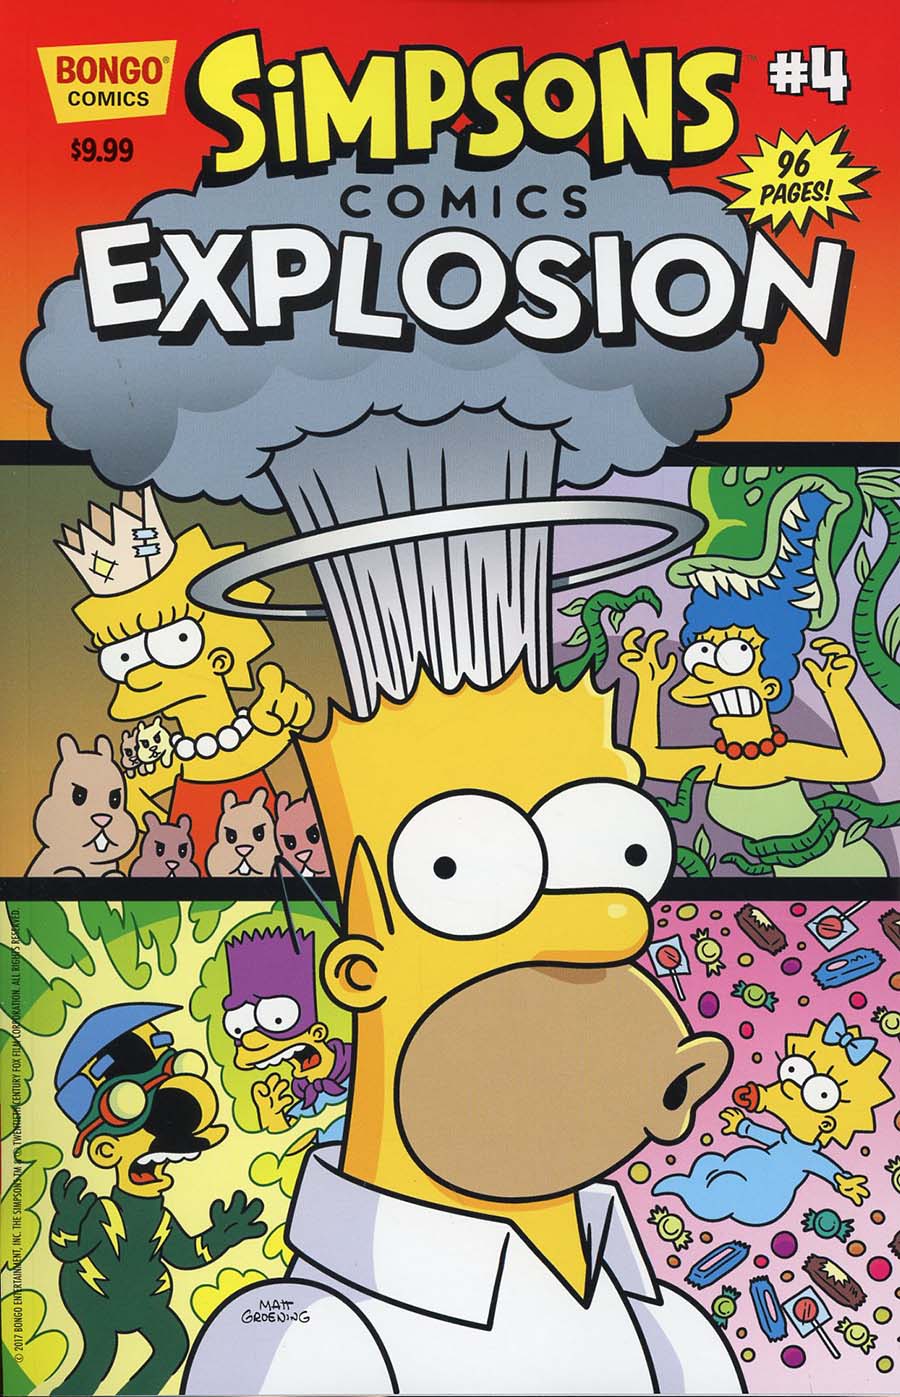 Simpsons Comics Explosion #4